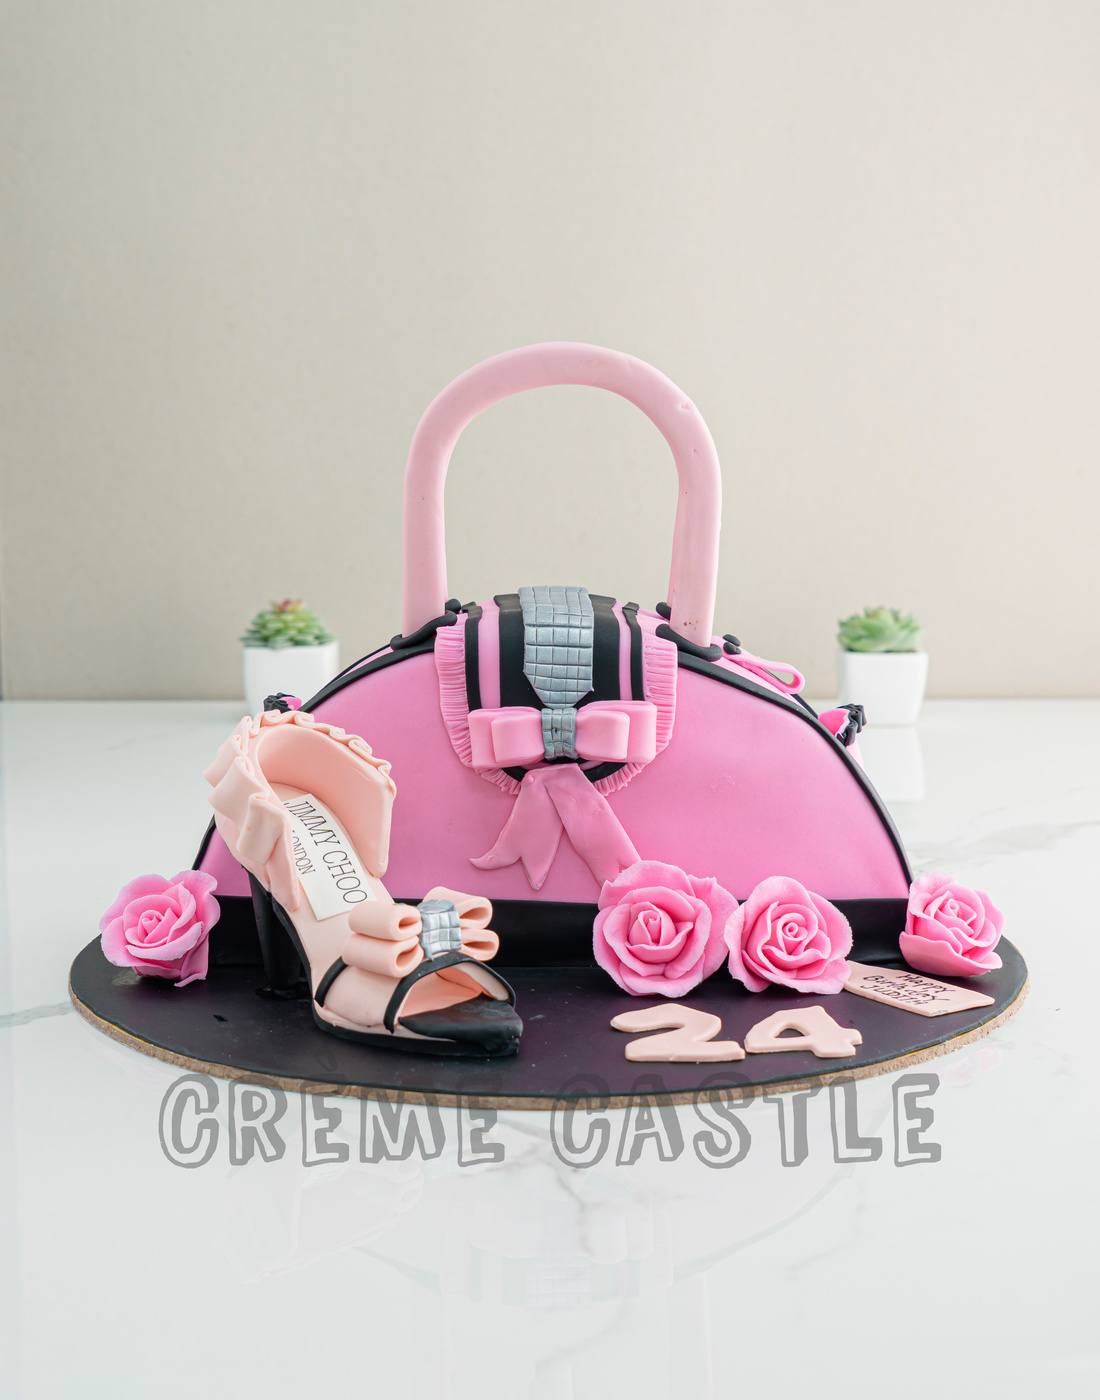 Stunning Chanel handbag 3D Birthday... - Elite Cake Designs | Facebook